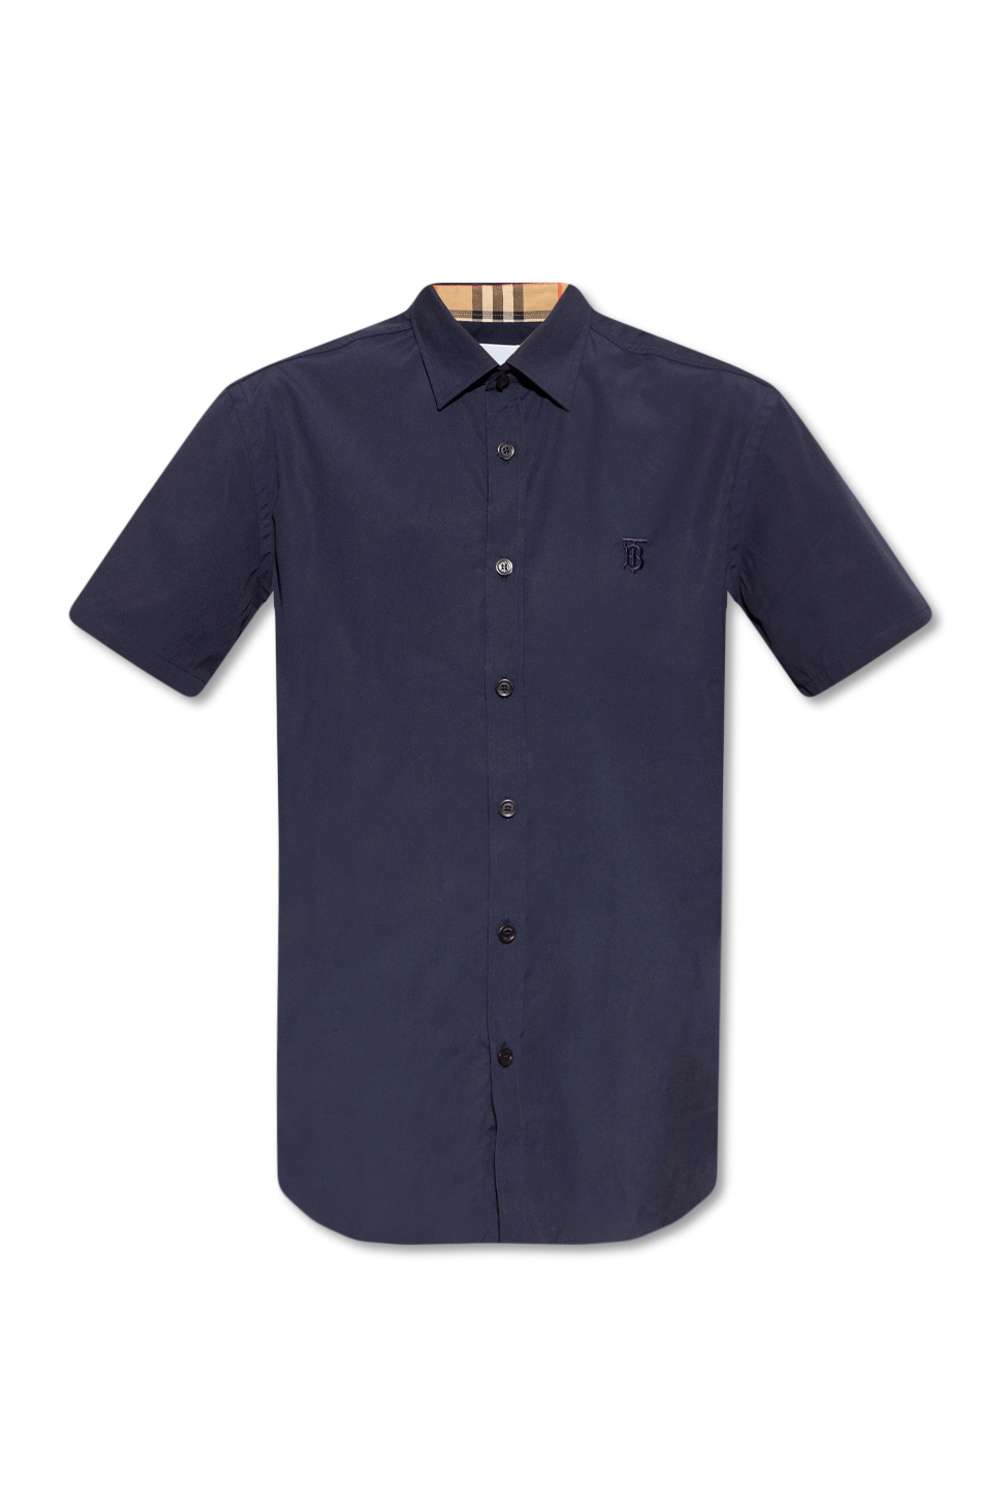 burberry Named ‘Sherwood’ short-sleeved shirt